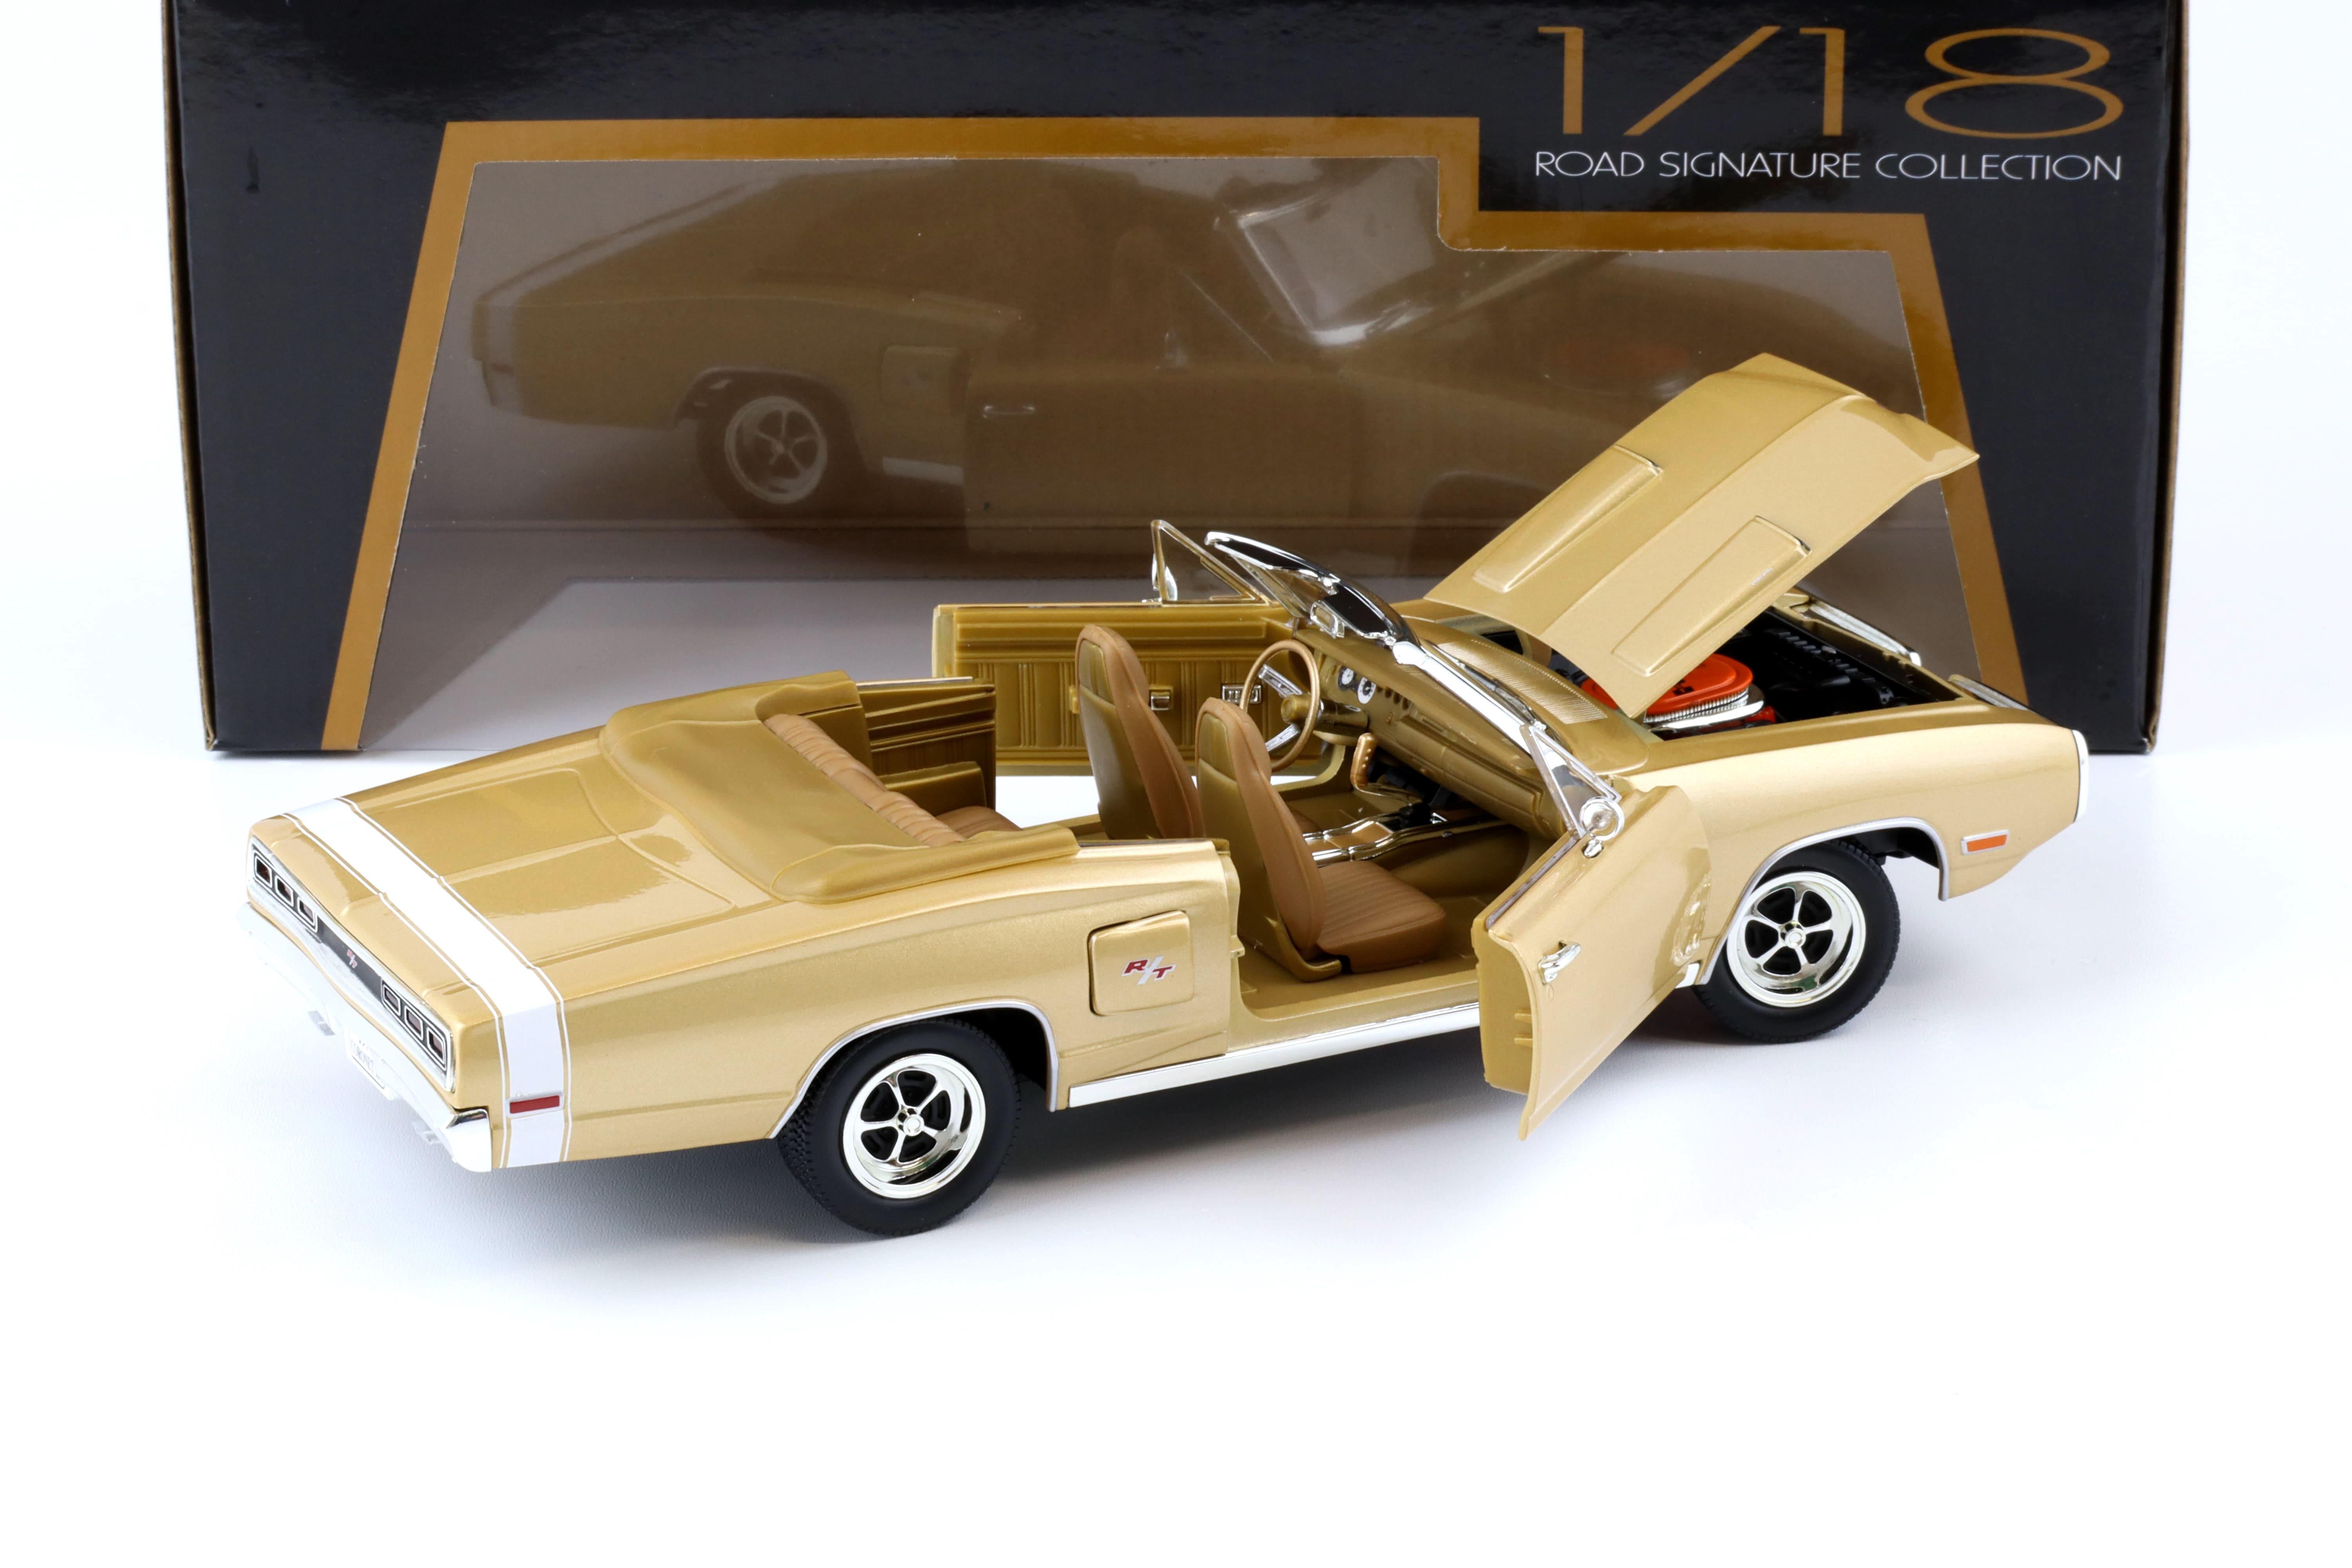 1:18 Road Signature 1970 Dodge Coronet R/T Convertible golden brown